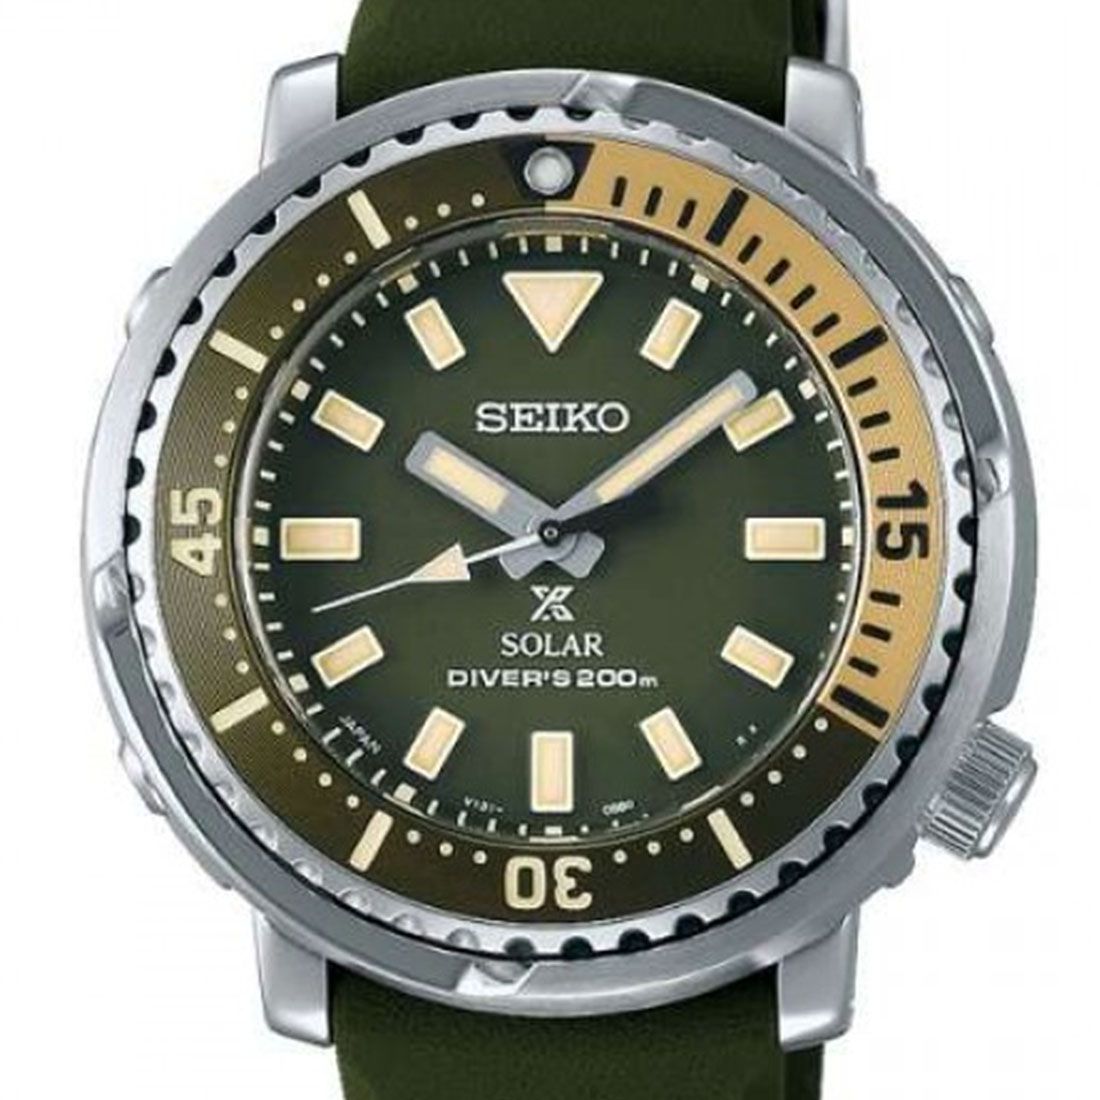 Seiko Prospex Street Safari Divers Green Dial JDM Japan Watch STBQ005 -Seiko